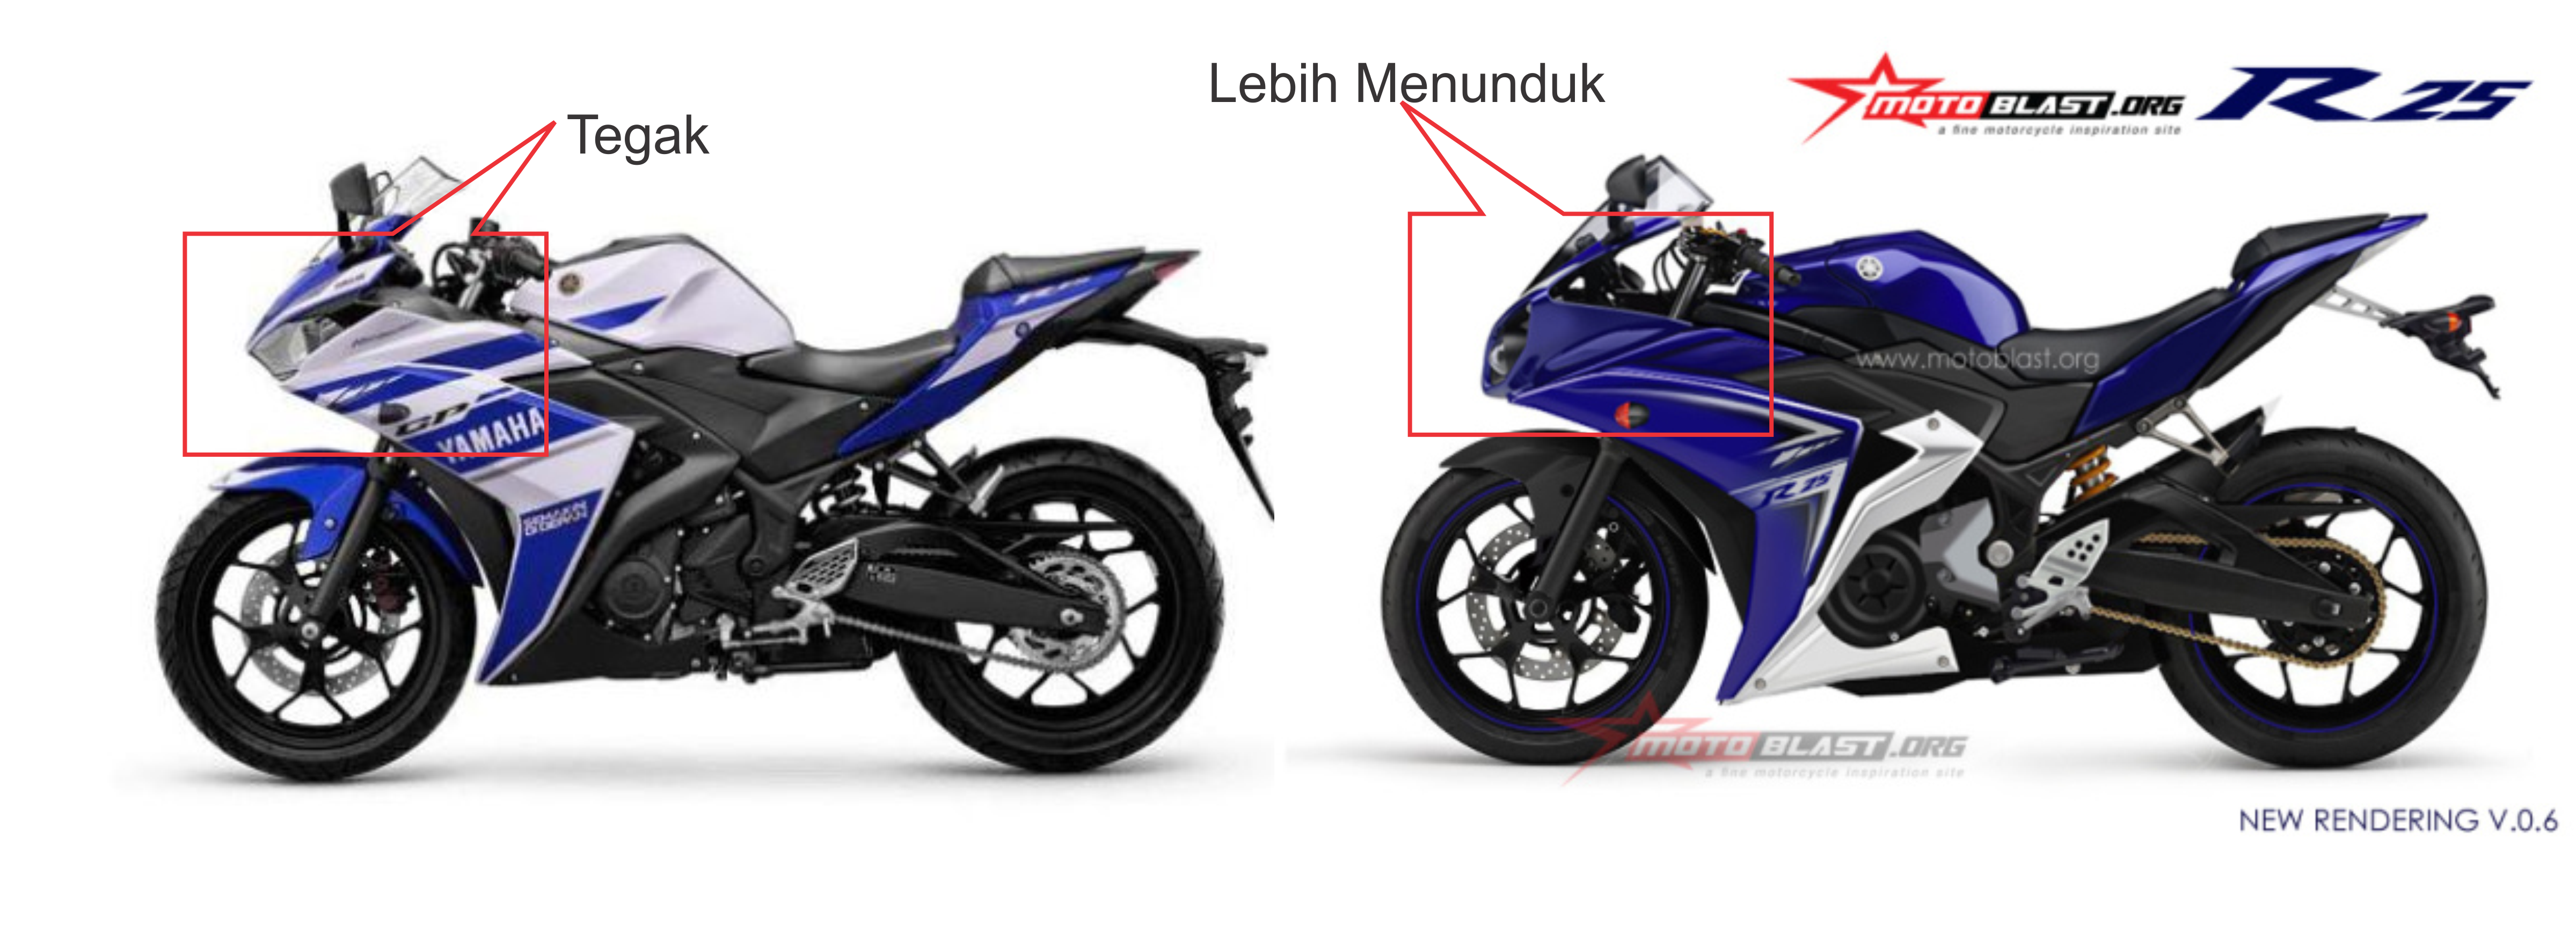 Modifikasi Yamaha R25 Indonesia Modifokeinfo